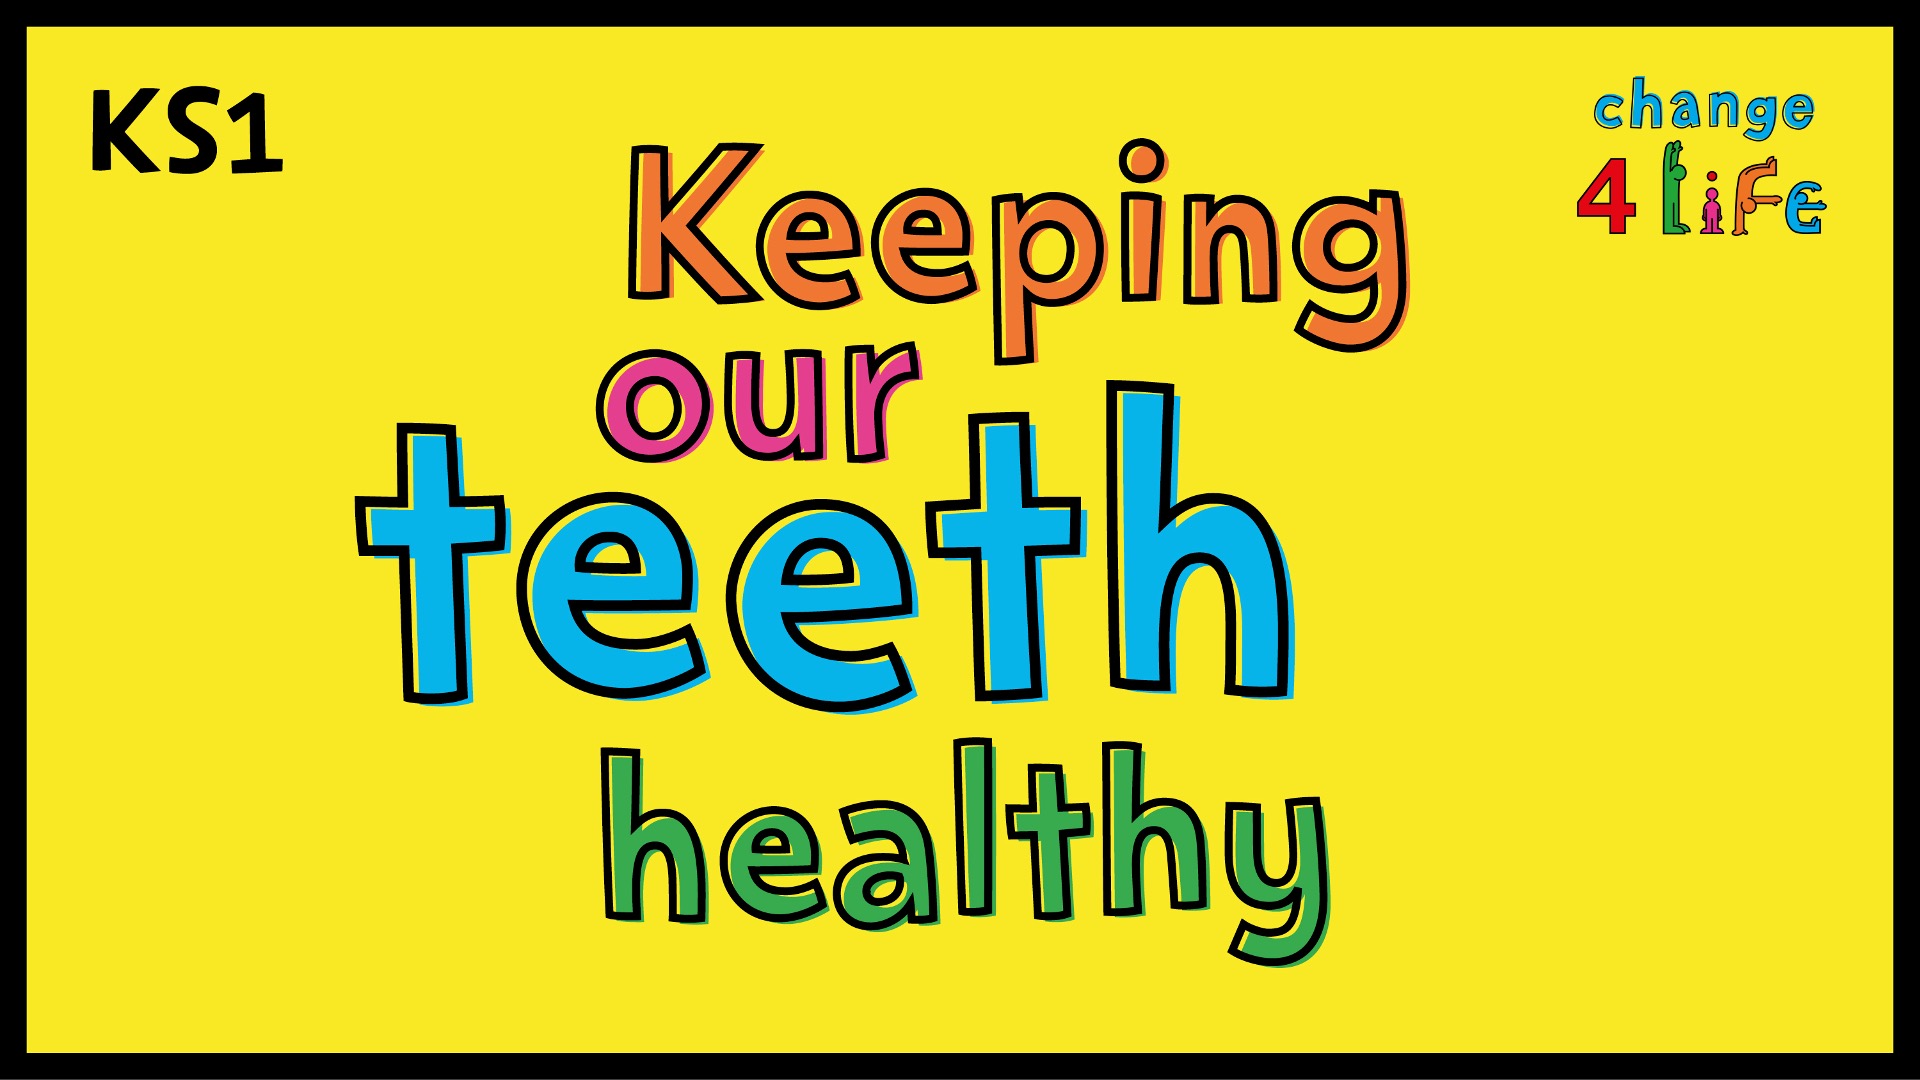 Keeping our teeth healthy KS1 lesson plan